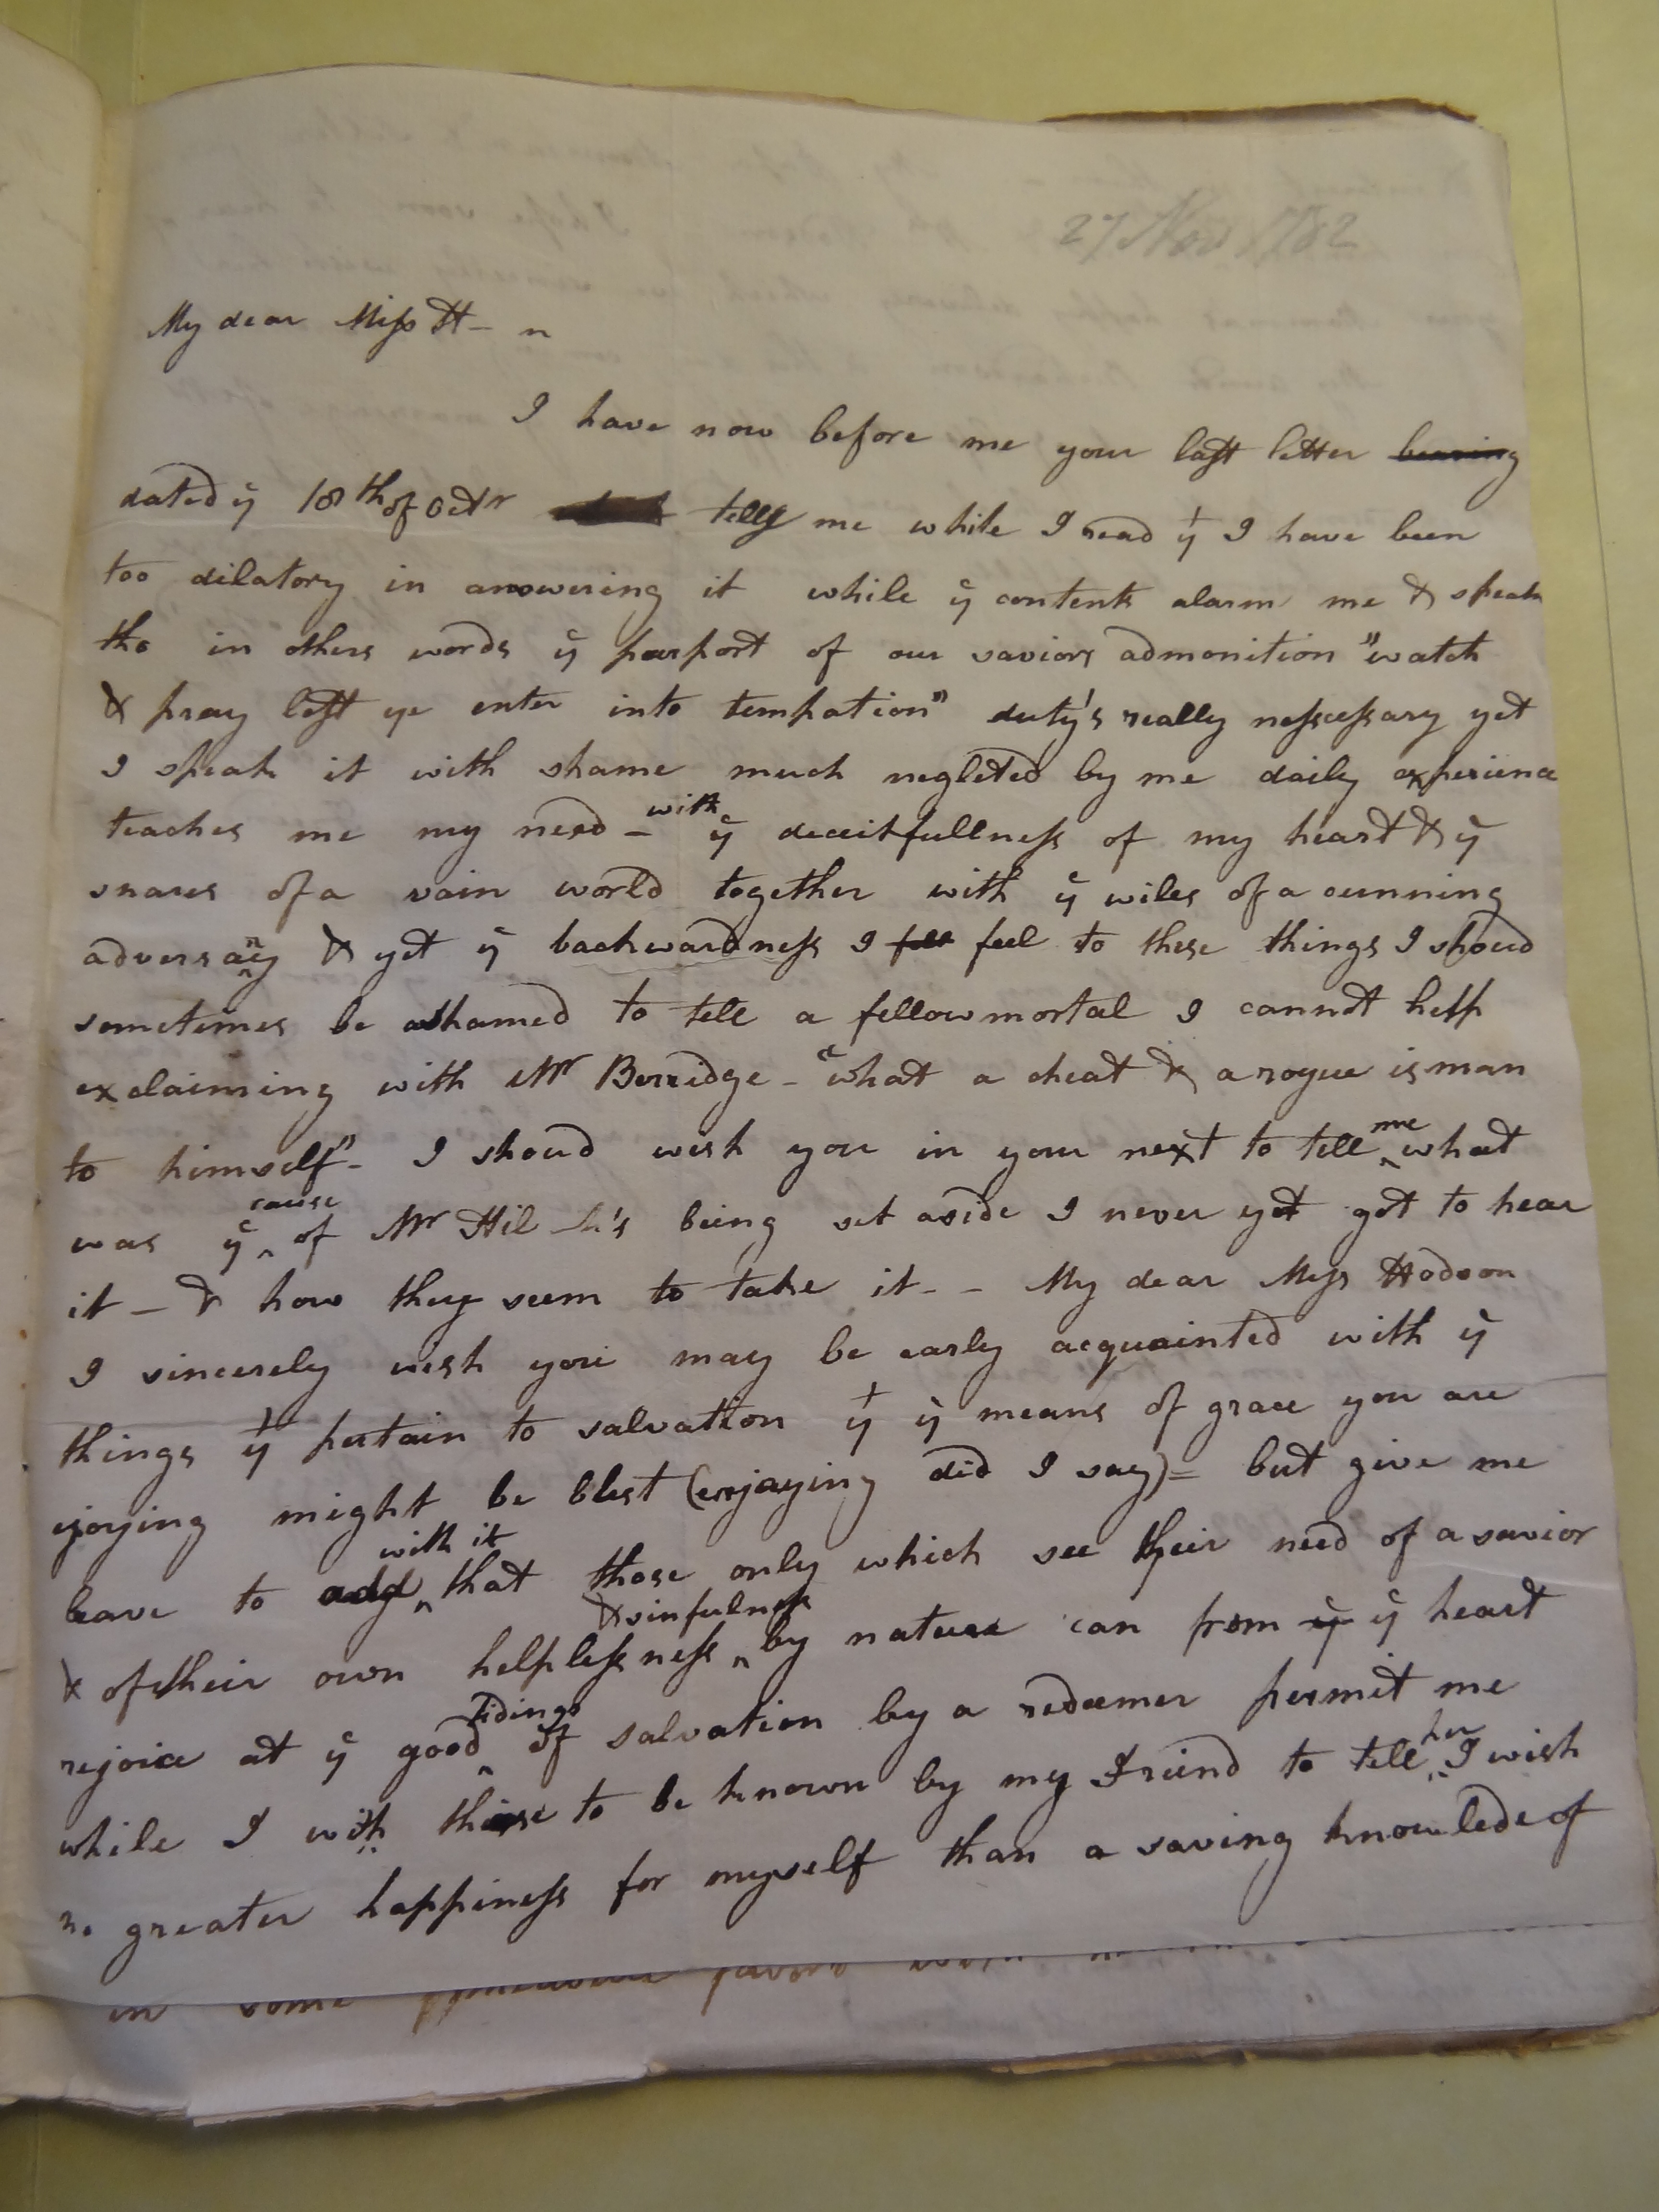 Image #1 of letter: Rebekah Bateman to Mary Jane Hodson, 27 November 1782